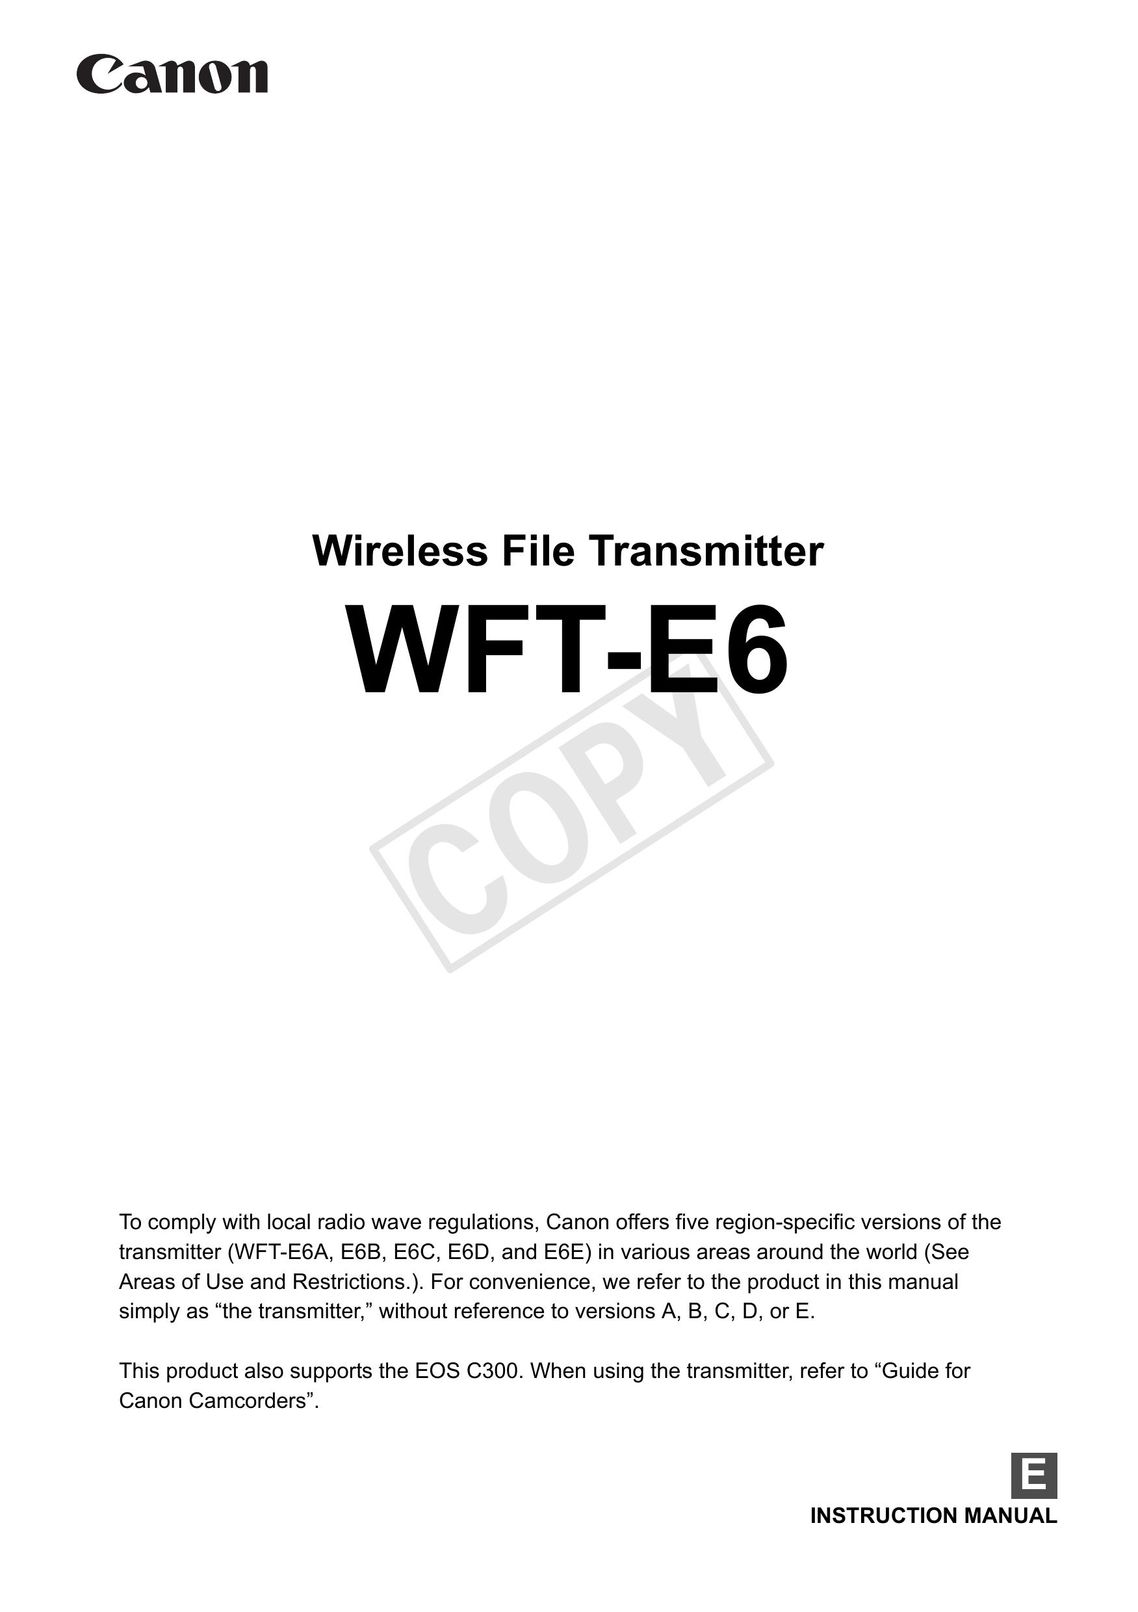 Canon Wireless File Transmitter Wireless Office Headset User Manual